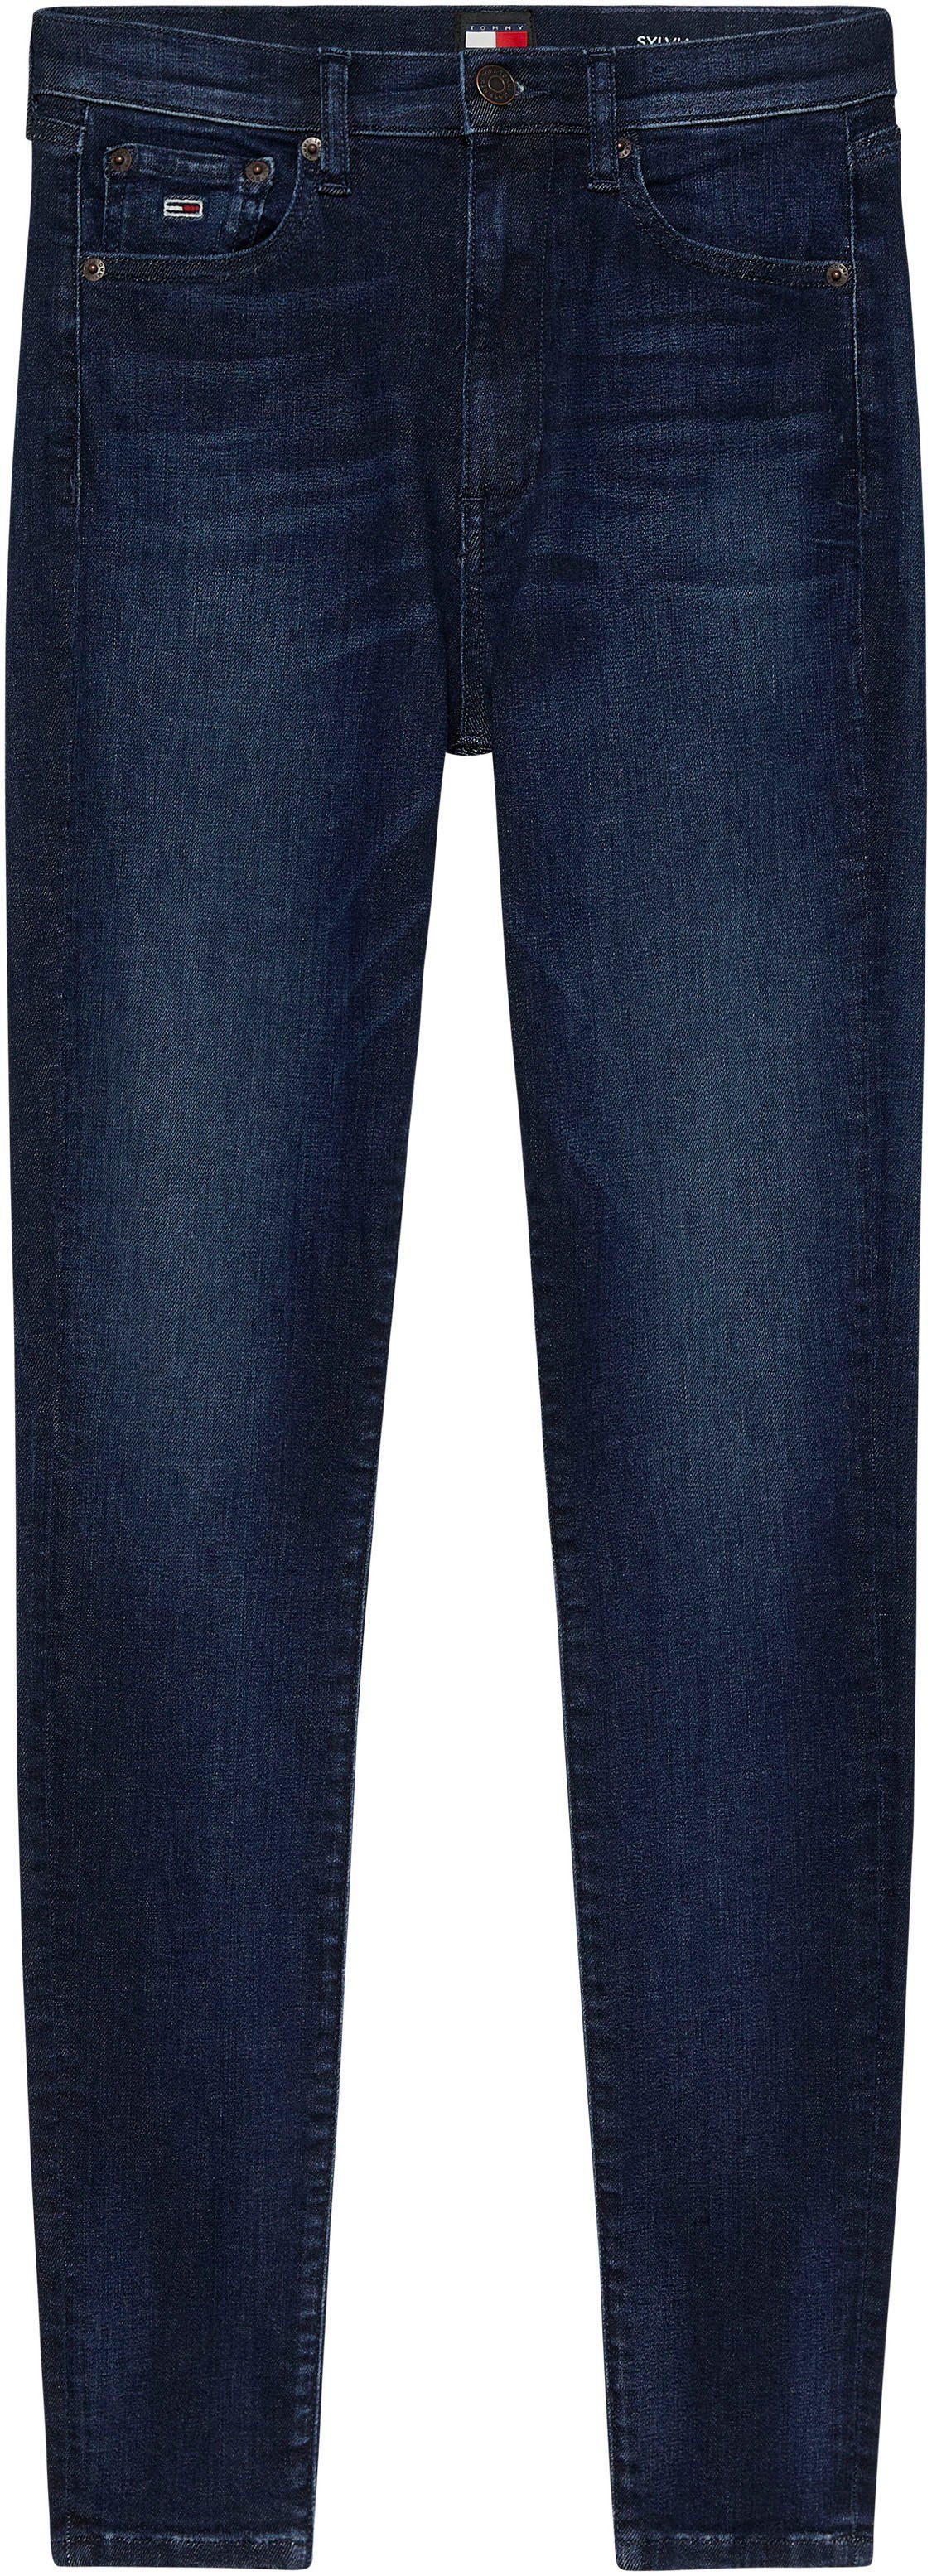 Tommy Jeans Bequeme Denim1 Ledermarkenlabel Sylvia Dark mit Jeans